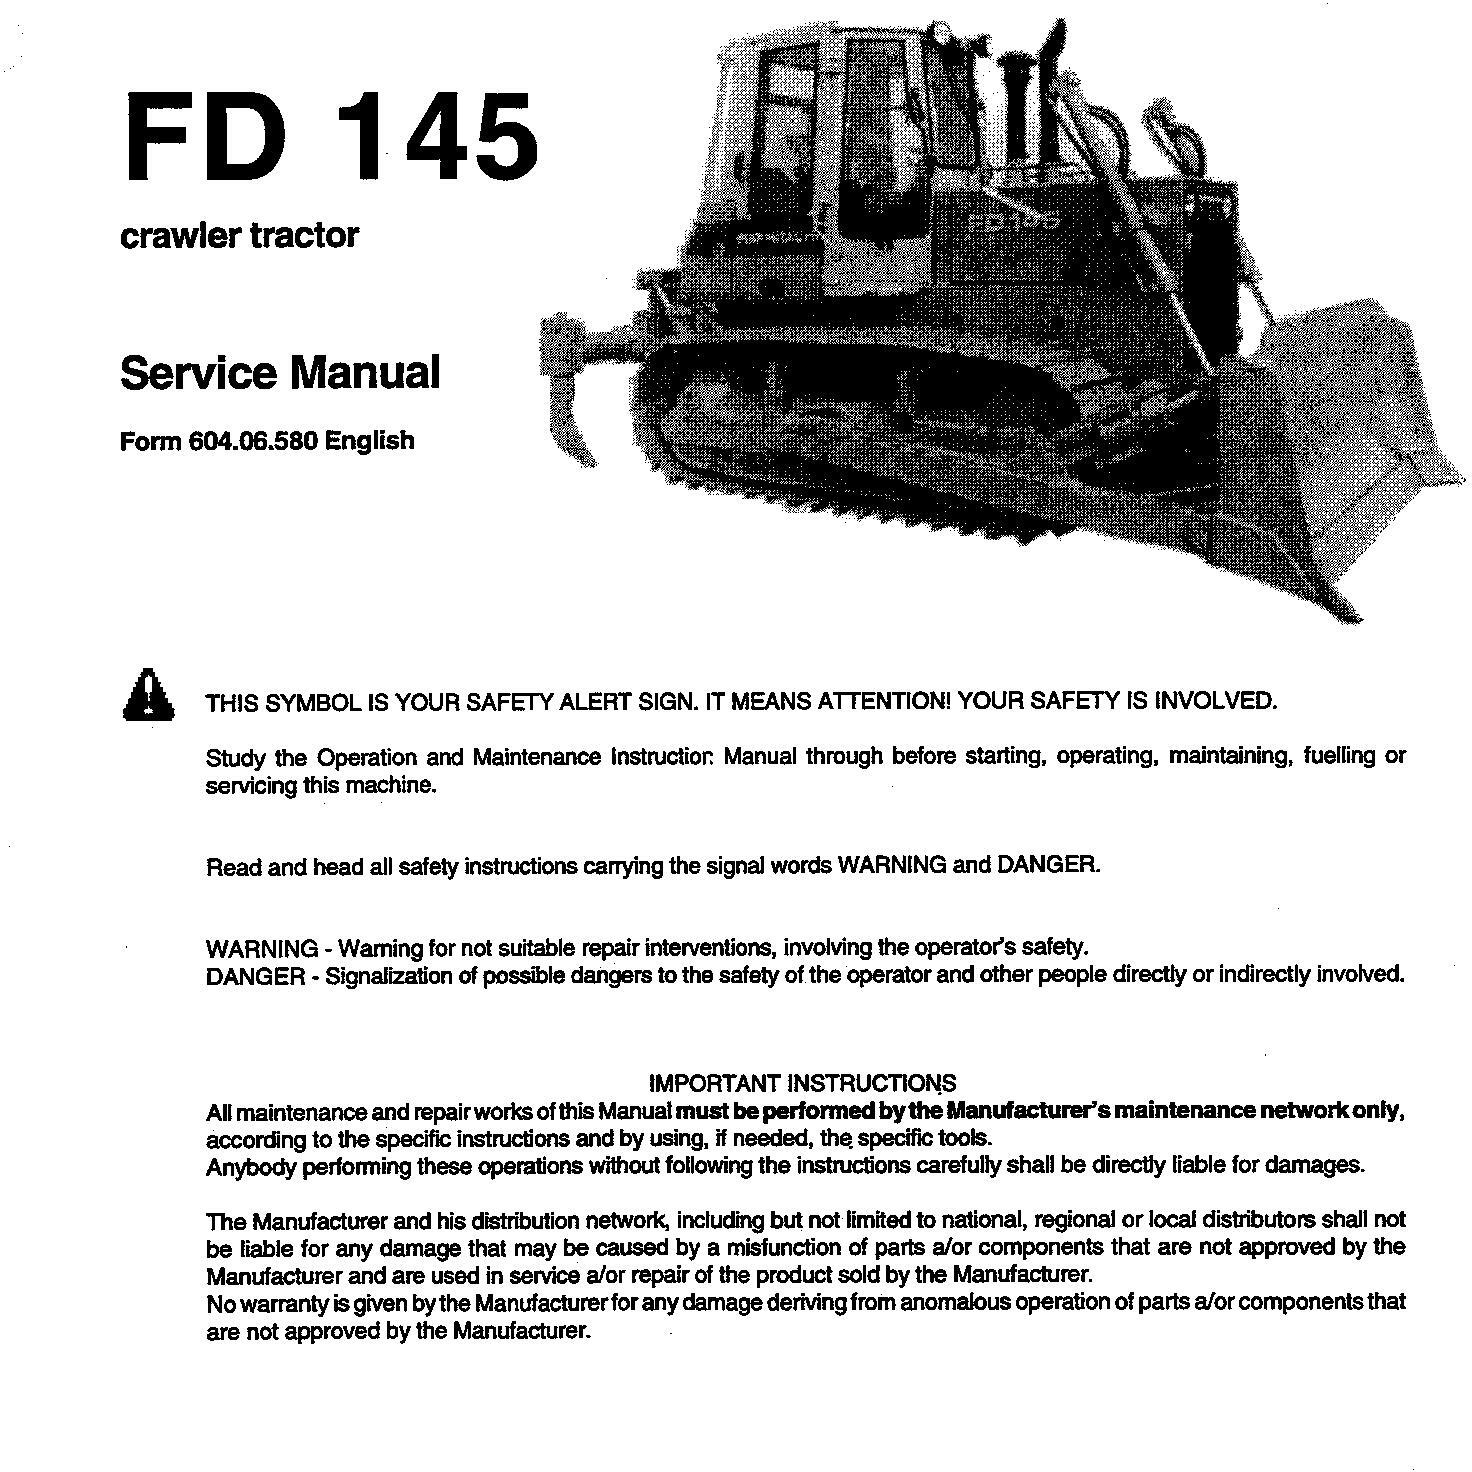 Fiat-Allis FD145 Crawler Tractor Service Manual - 1